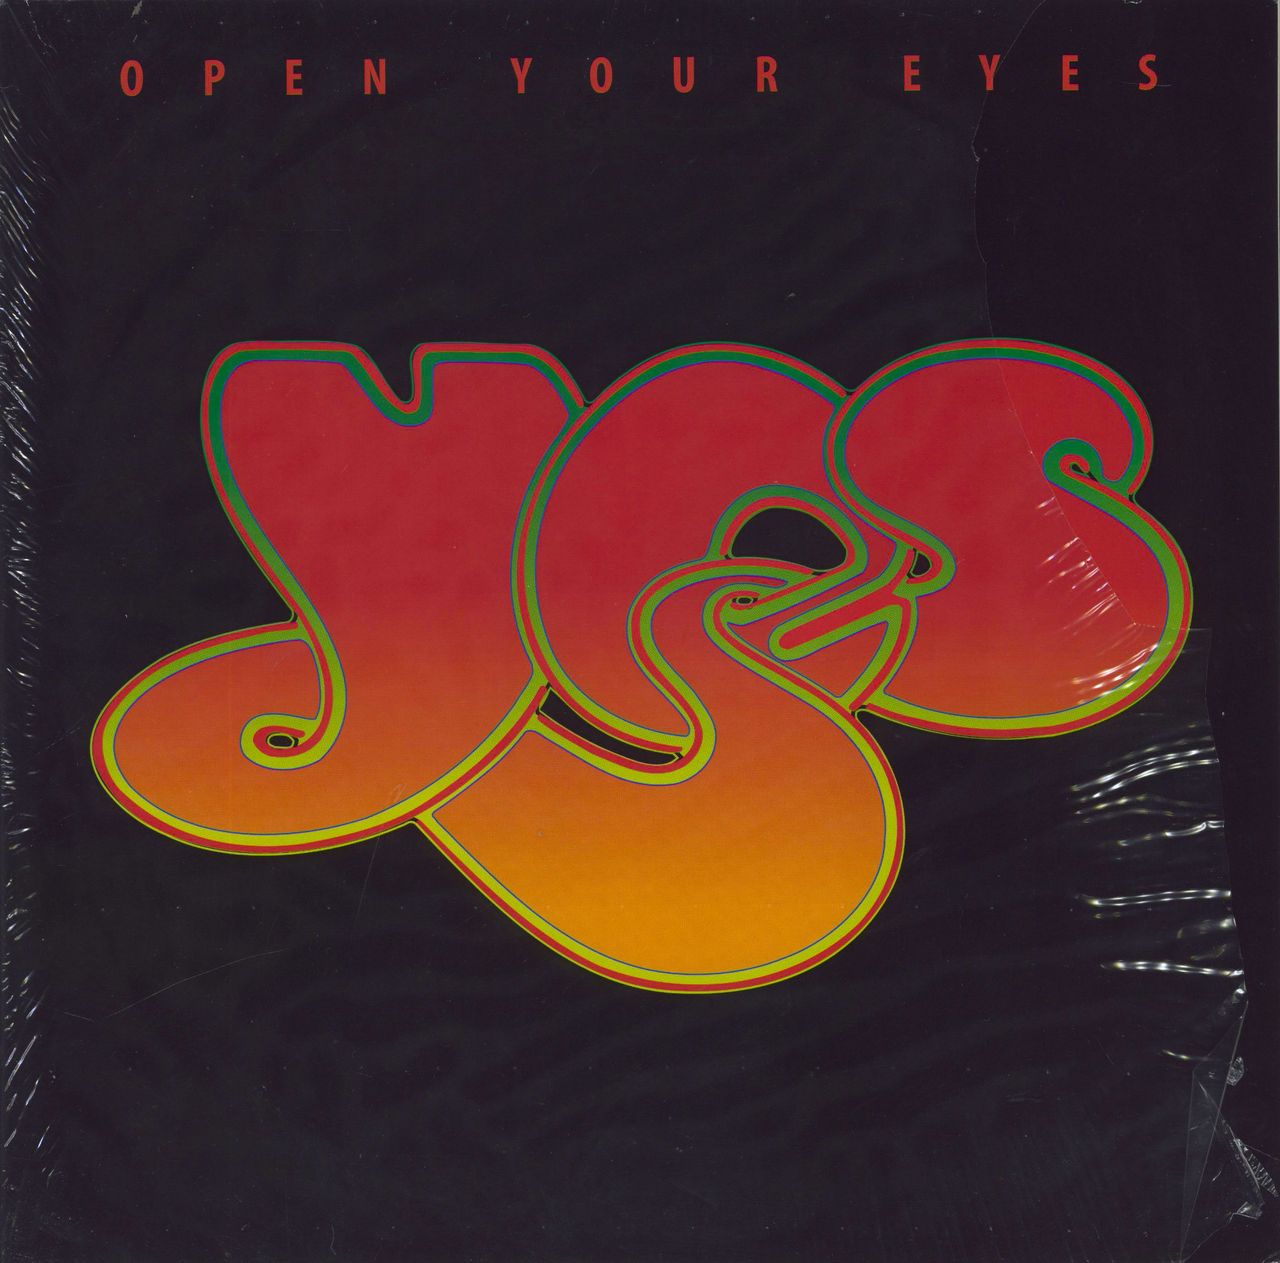 Yes Open Your Eyes - 180gm Vinyl - Shrink German 2-LP vinyl set —  RareVinyl.com